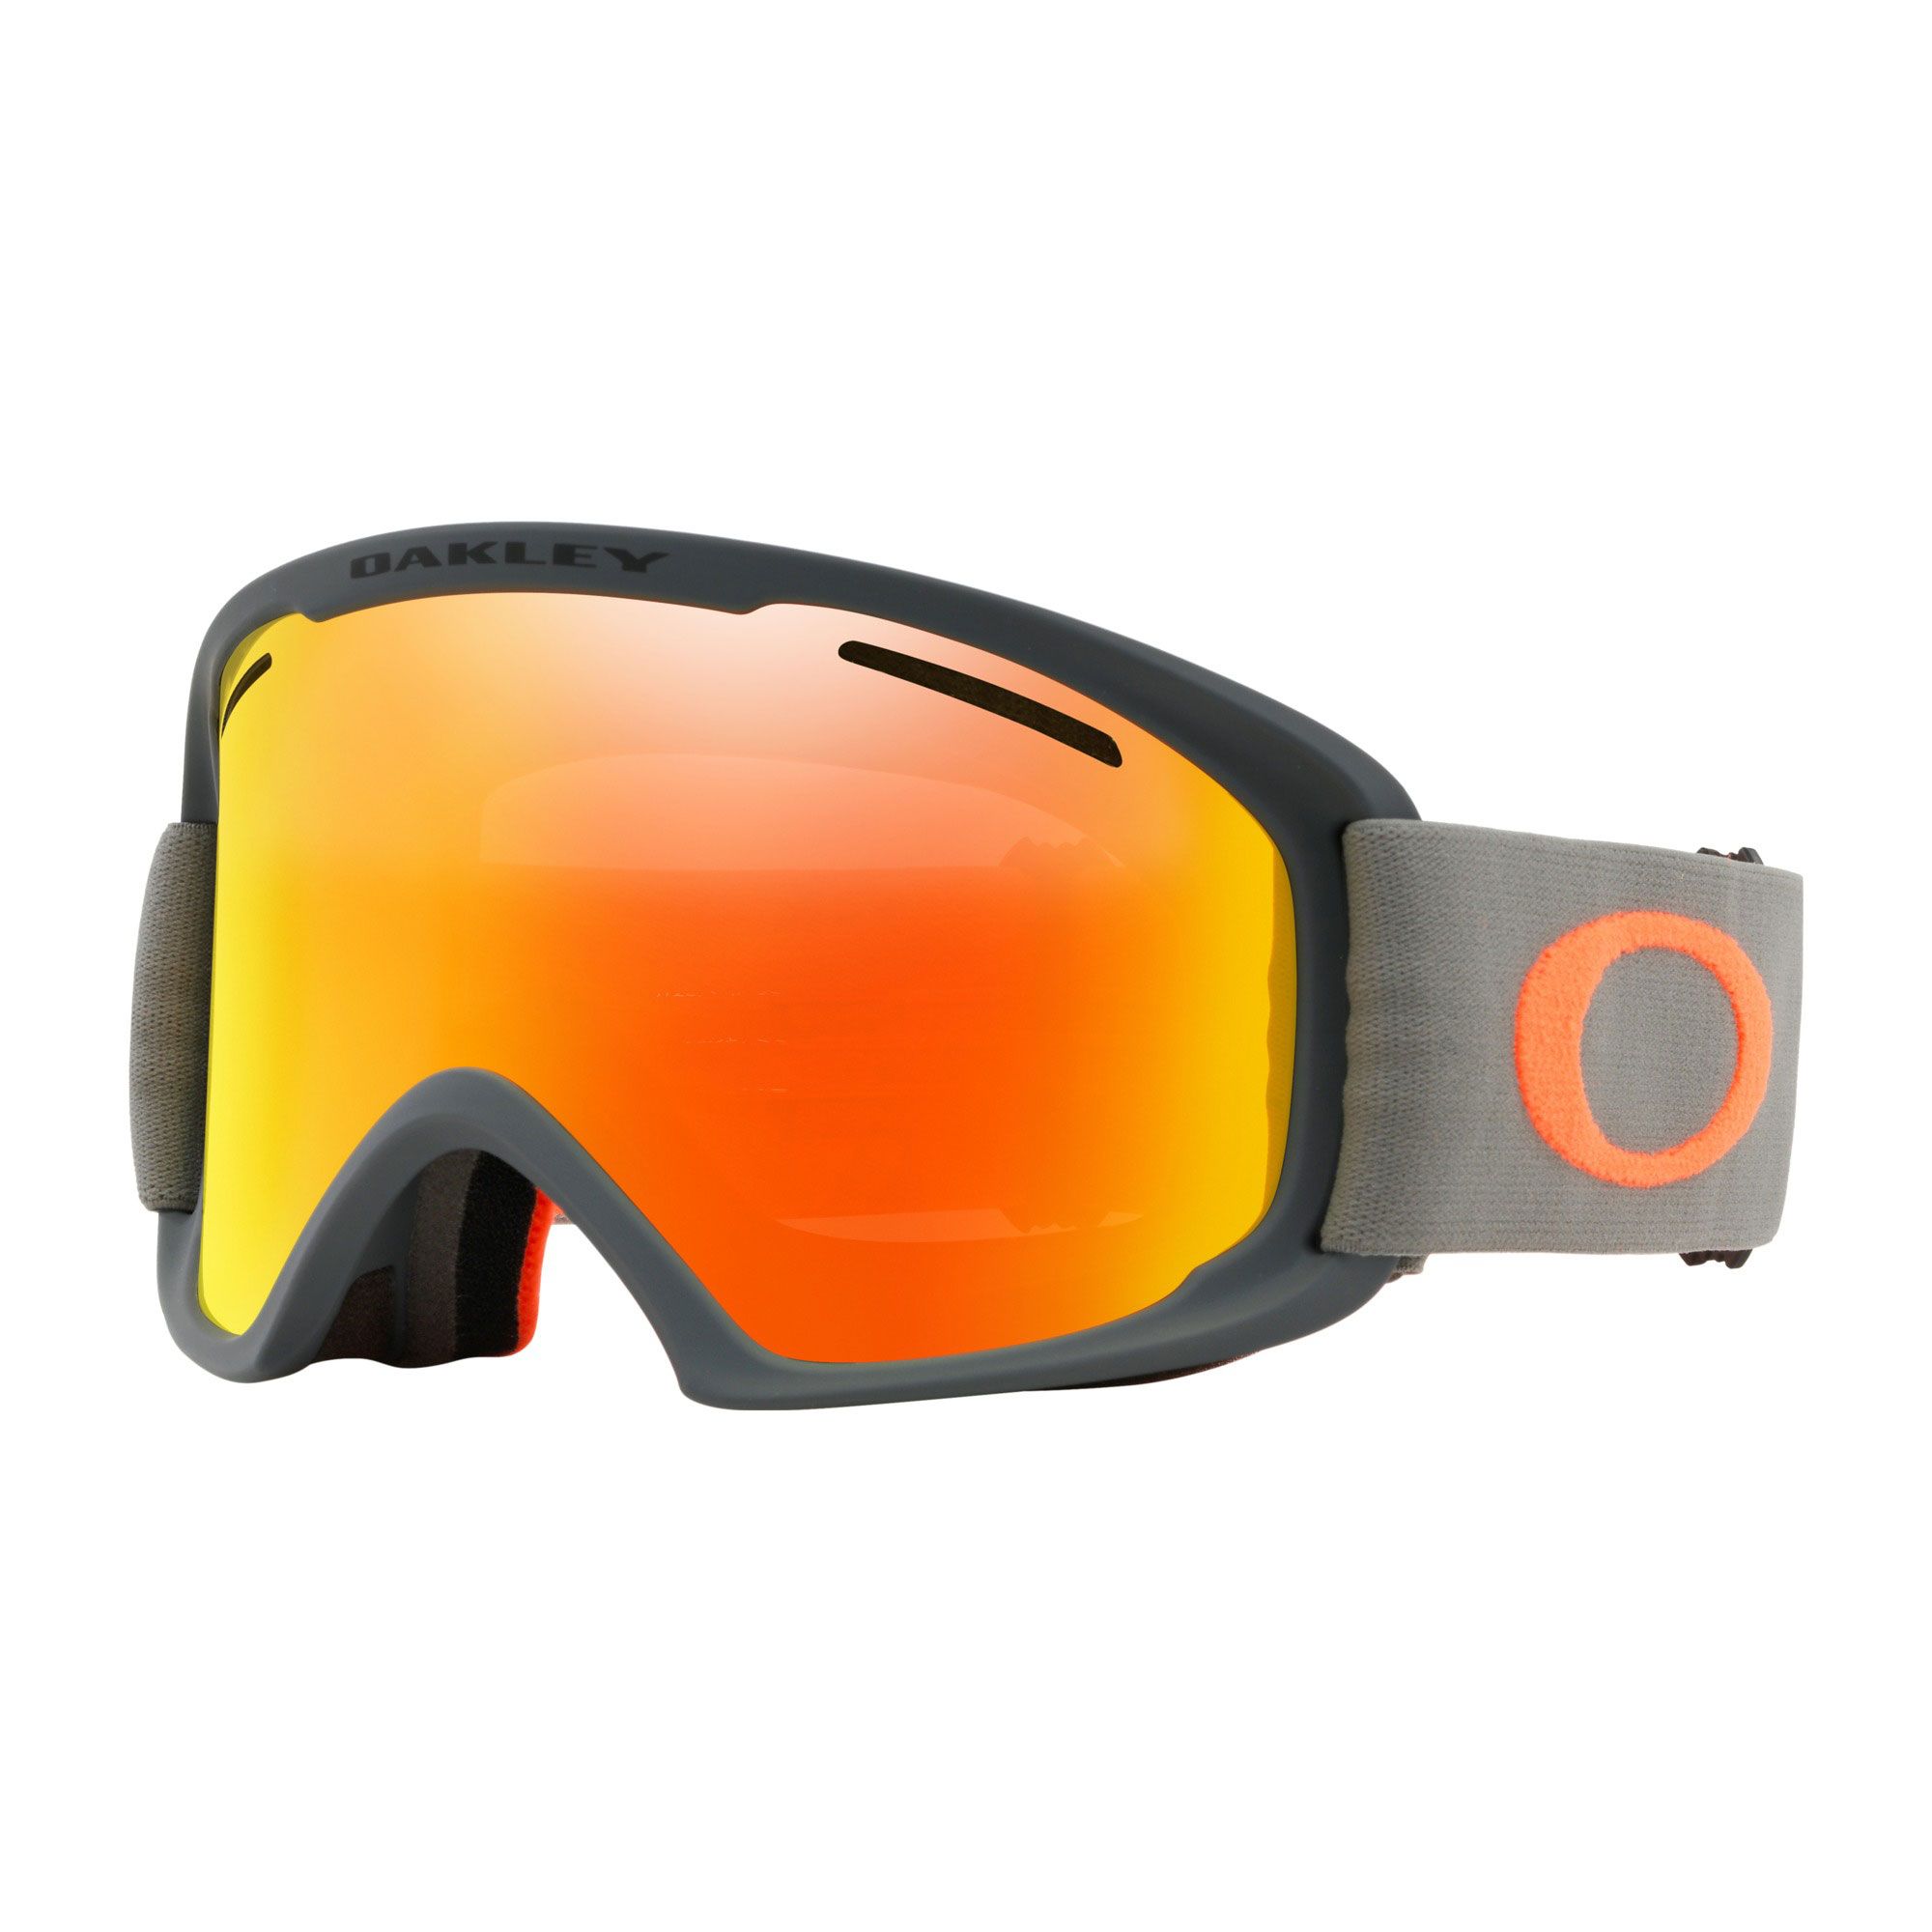 Masque de Ski O-frames 2.0 XL - Dark Brush Orange - Fire Iridium + Persimmon